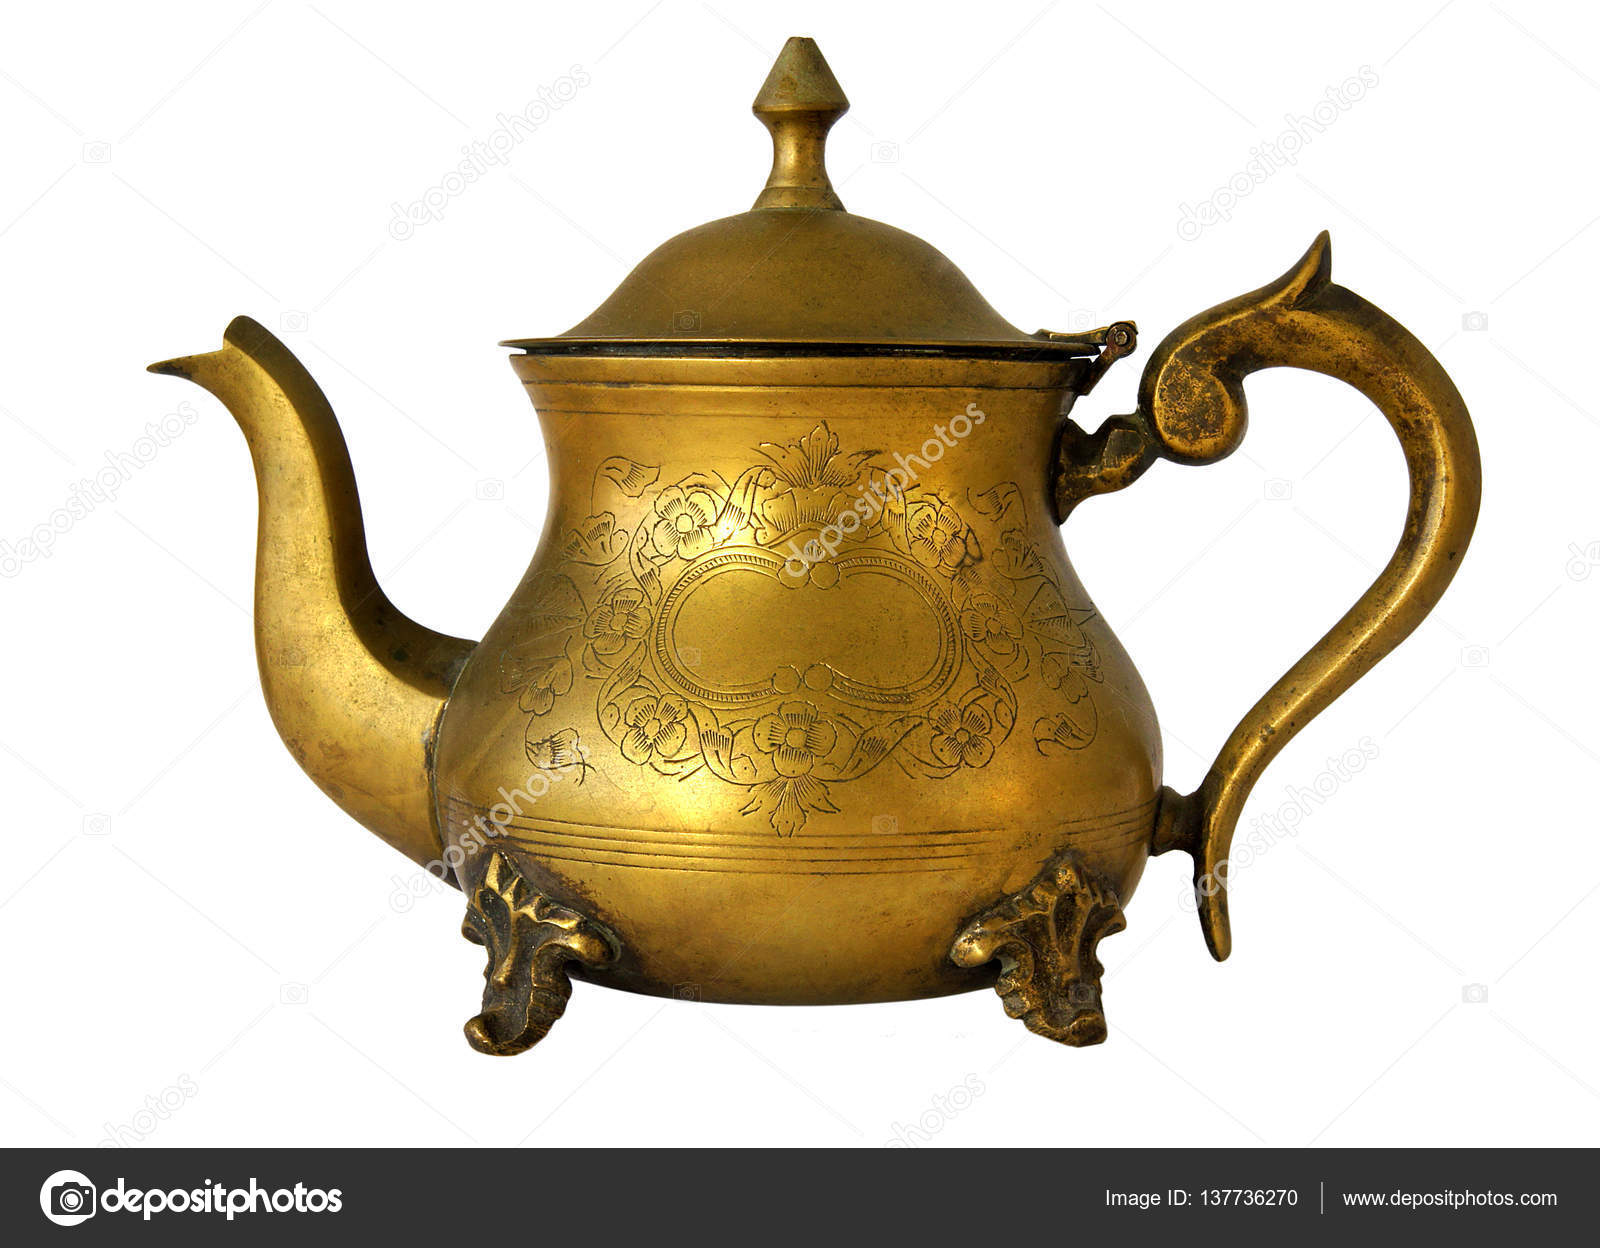 https://st3.depositphotos.com/2479953/13773/i/1600/depositphotos_137736270-stock-photo-antique-brass-teapot.jpg